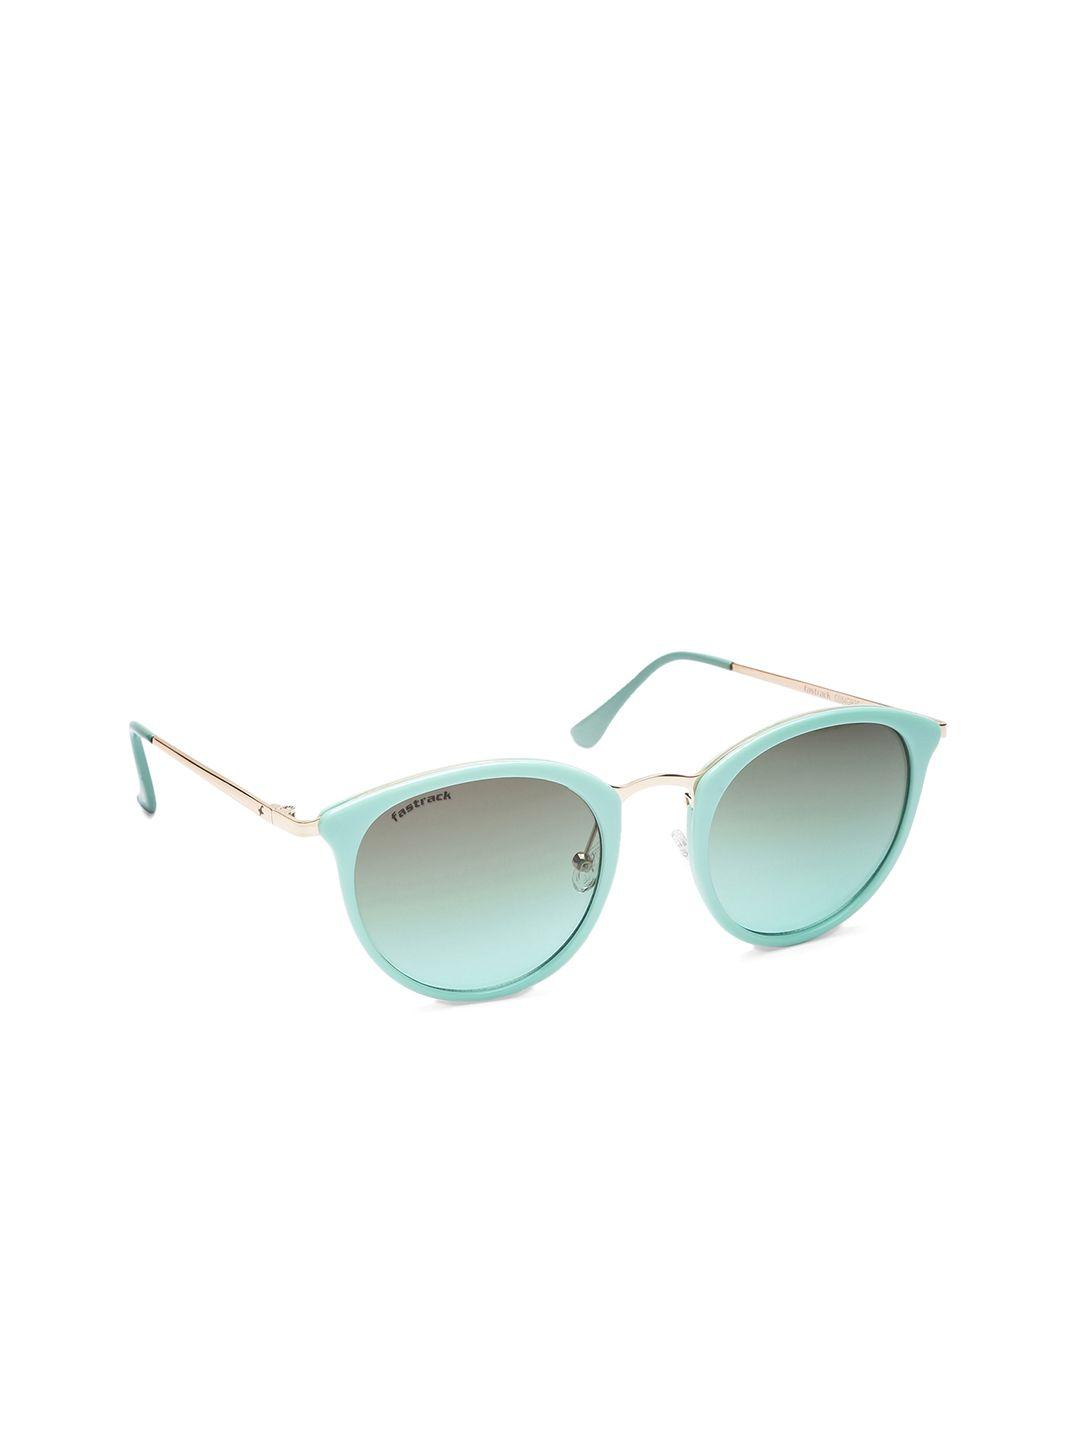 fastrack-women-oval-sunglasses-c084gr3f